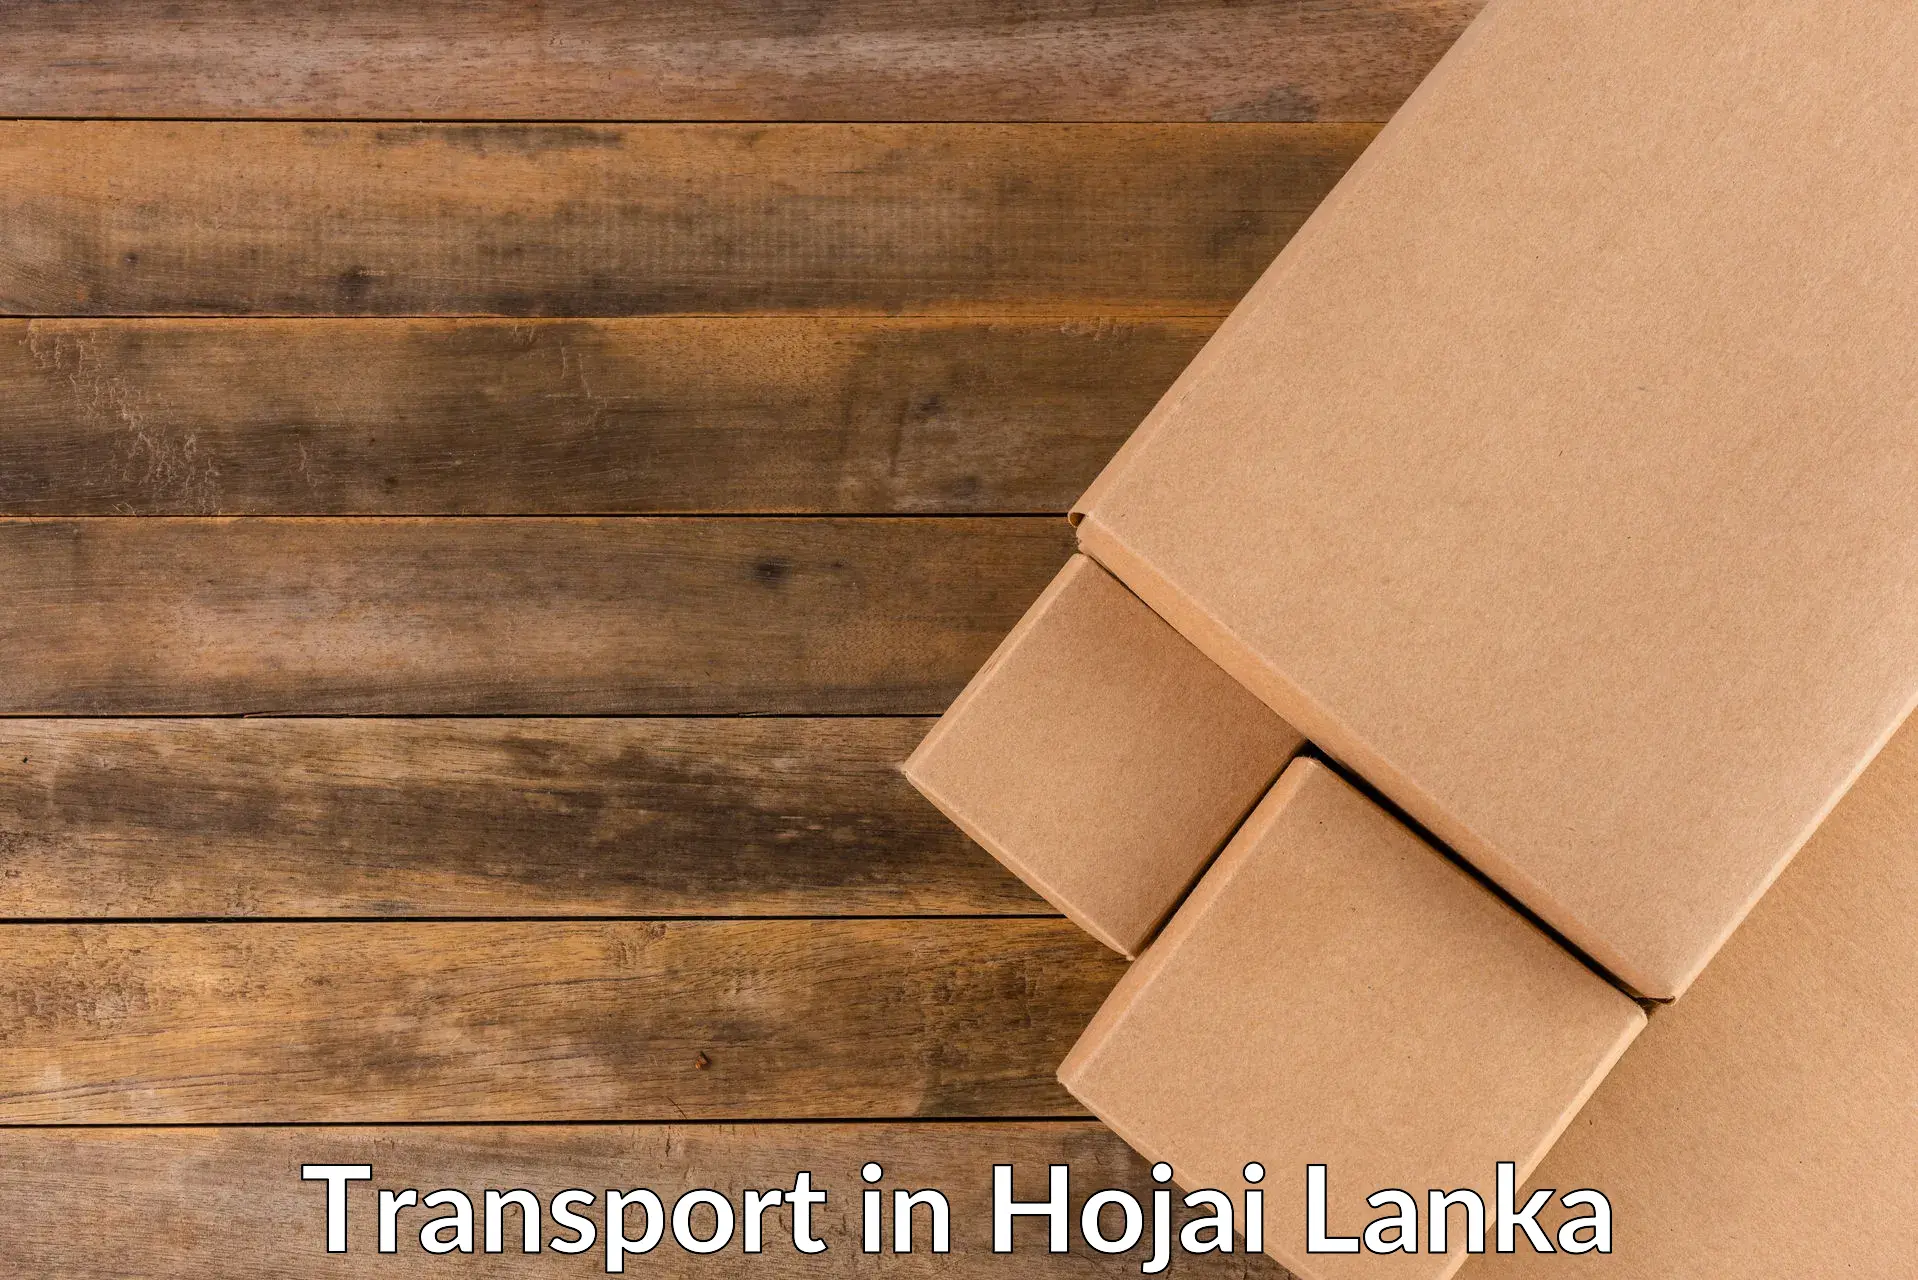 Road transport online services in Hojai Lanka